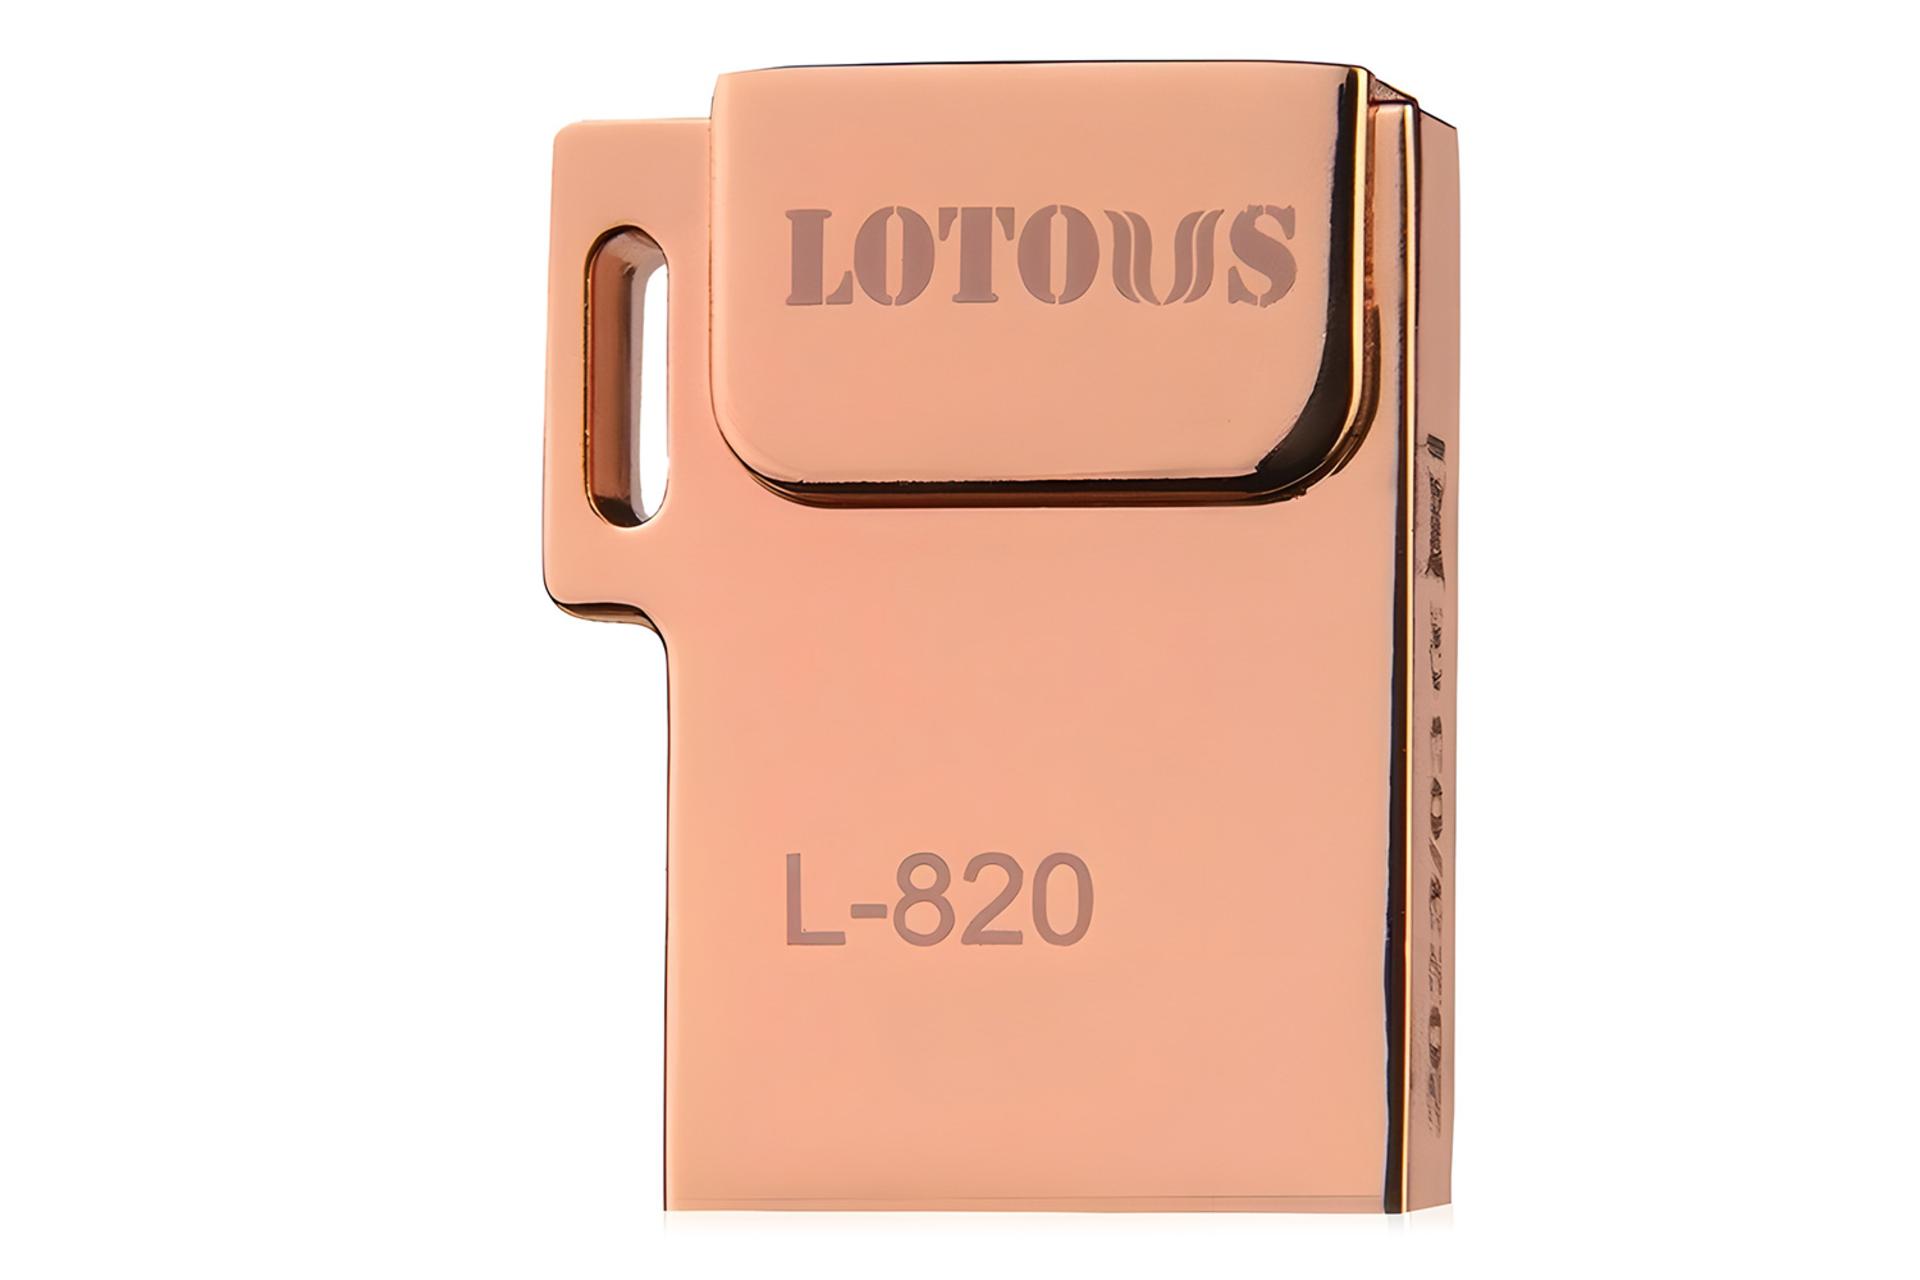 فلش مموری لوتوس Lotous L-820 64GB USB 2.0